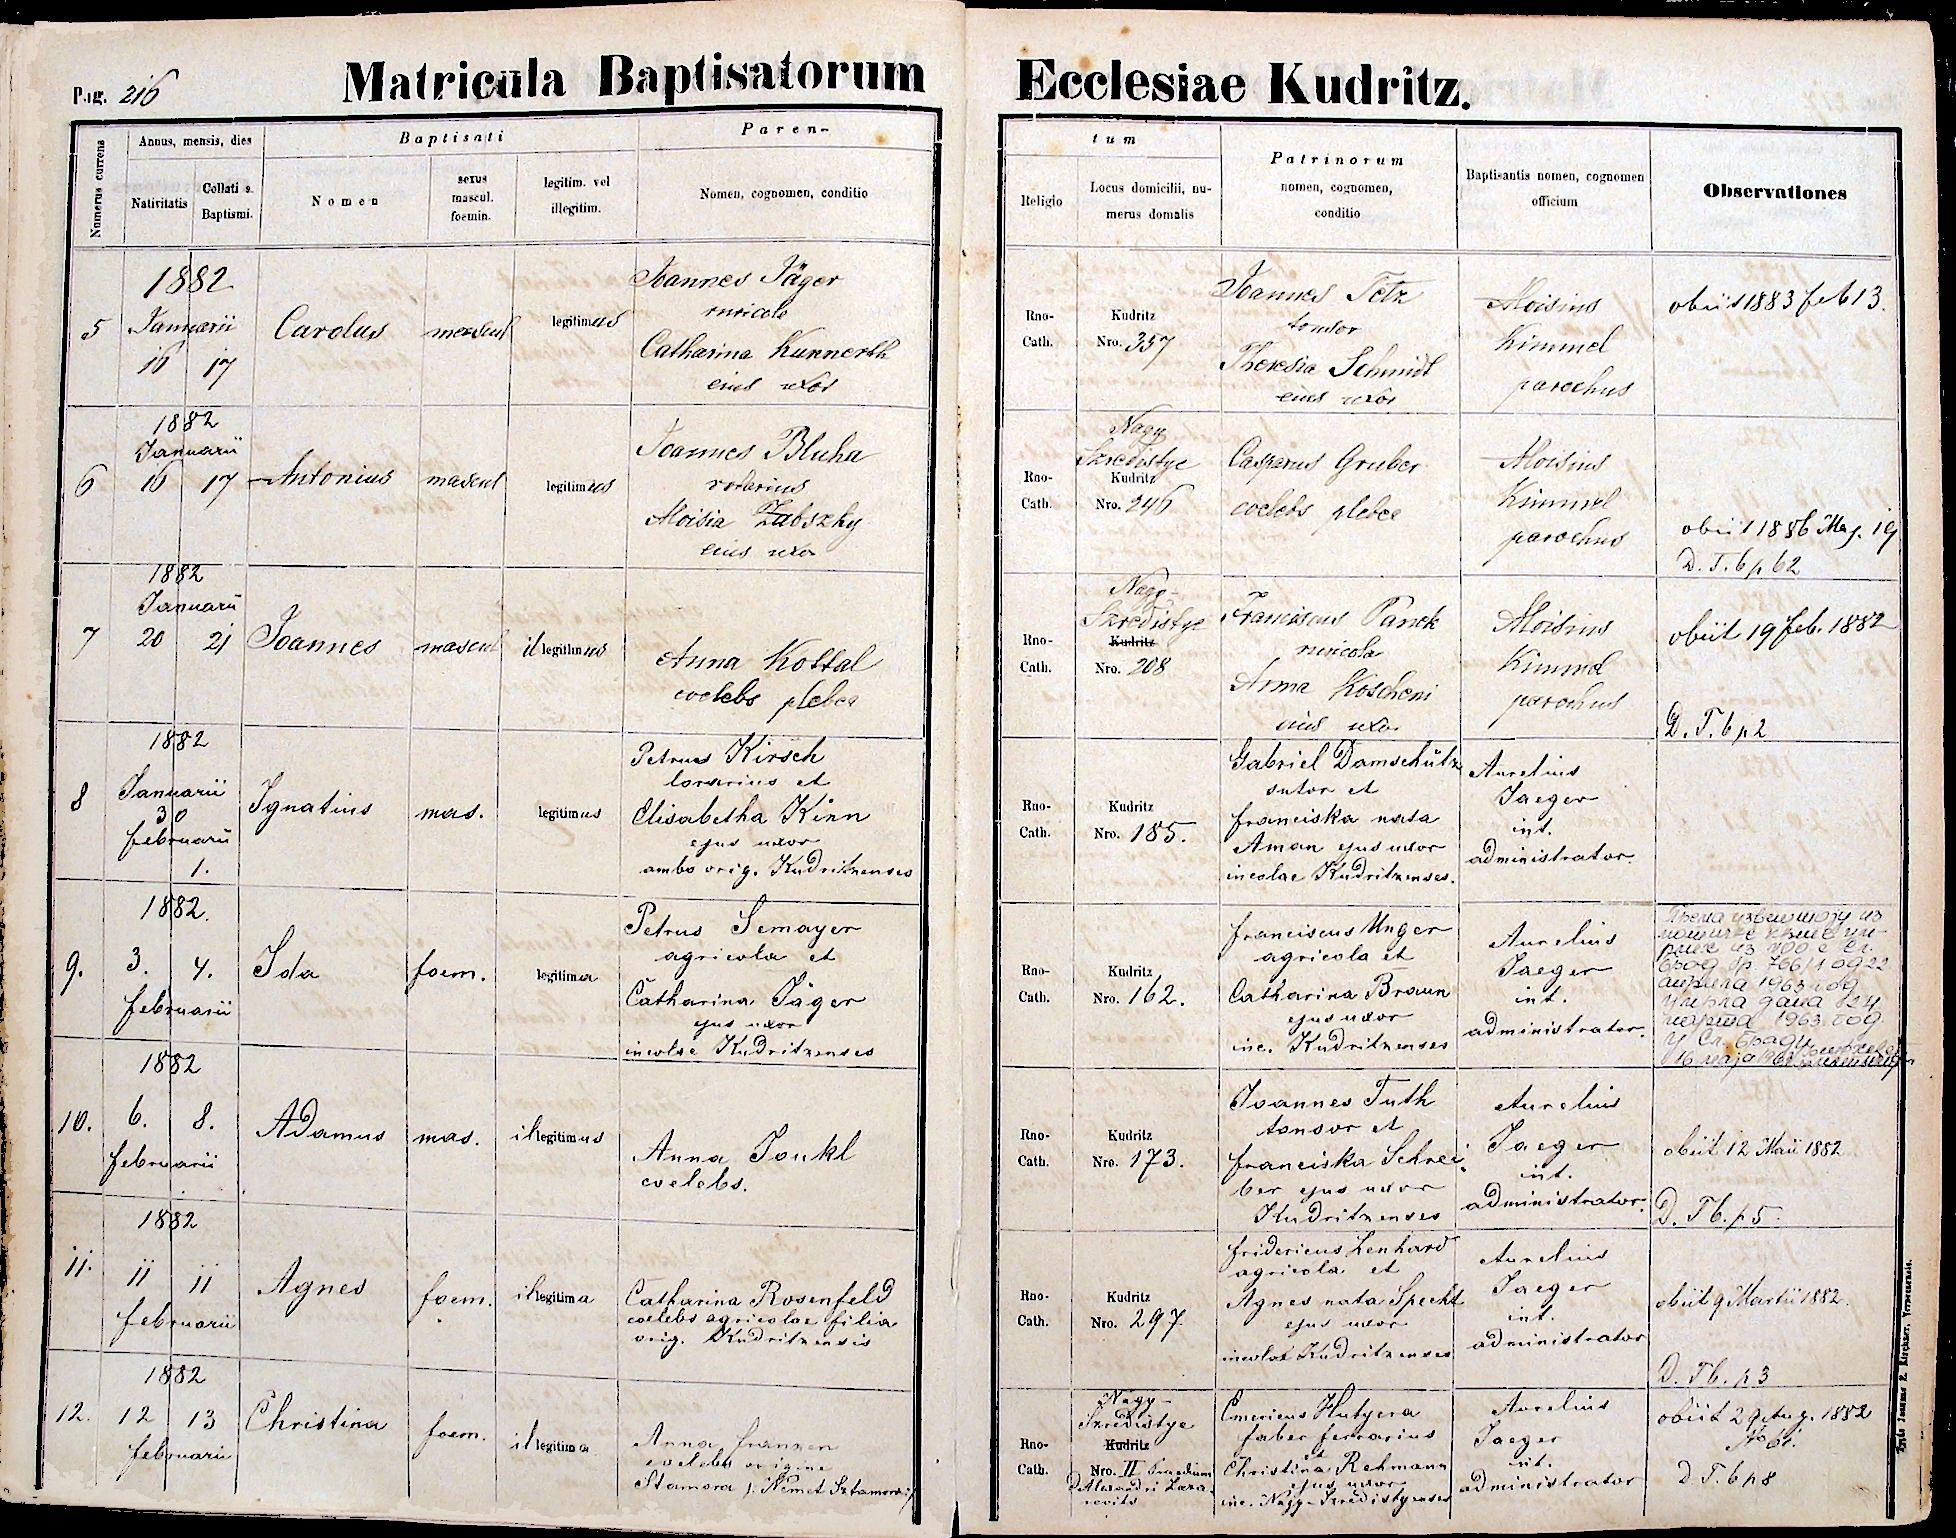 images/church_records/BIRTHS/1880-1883B/1882/216